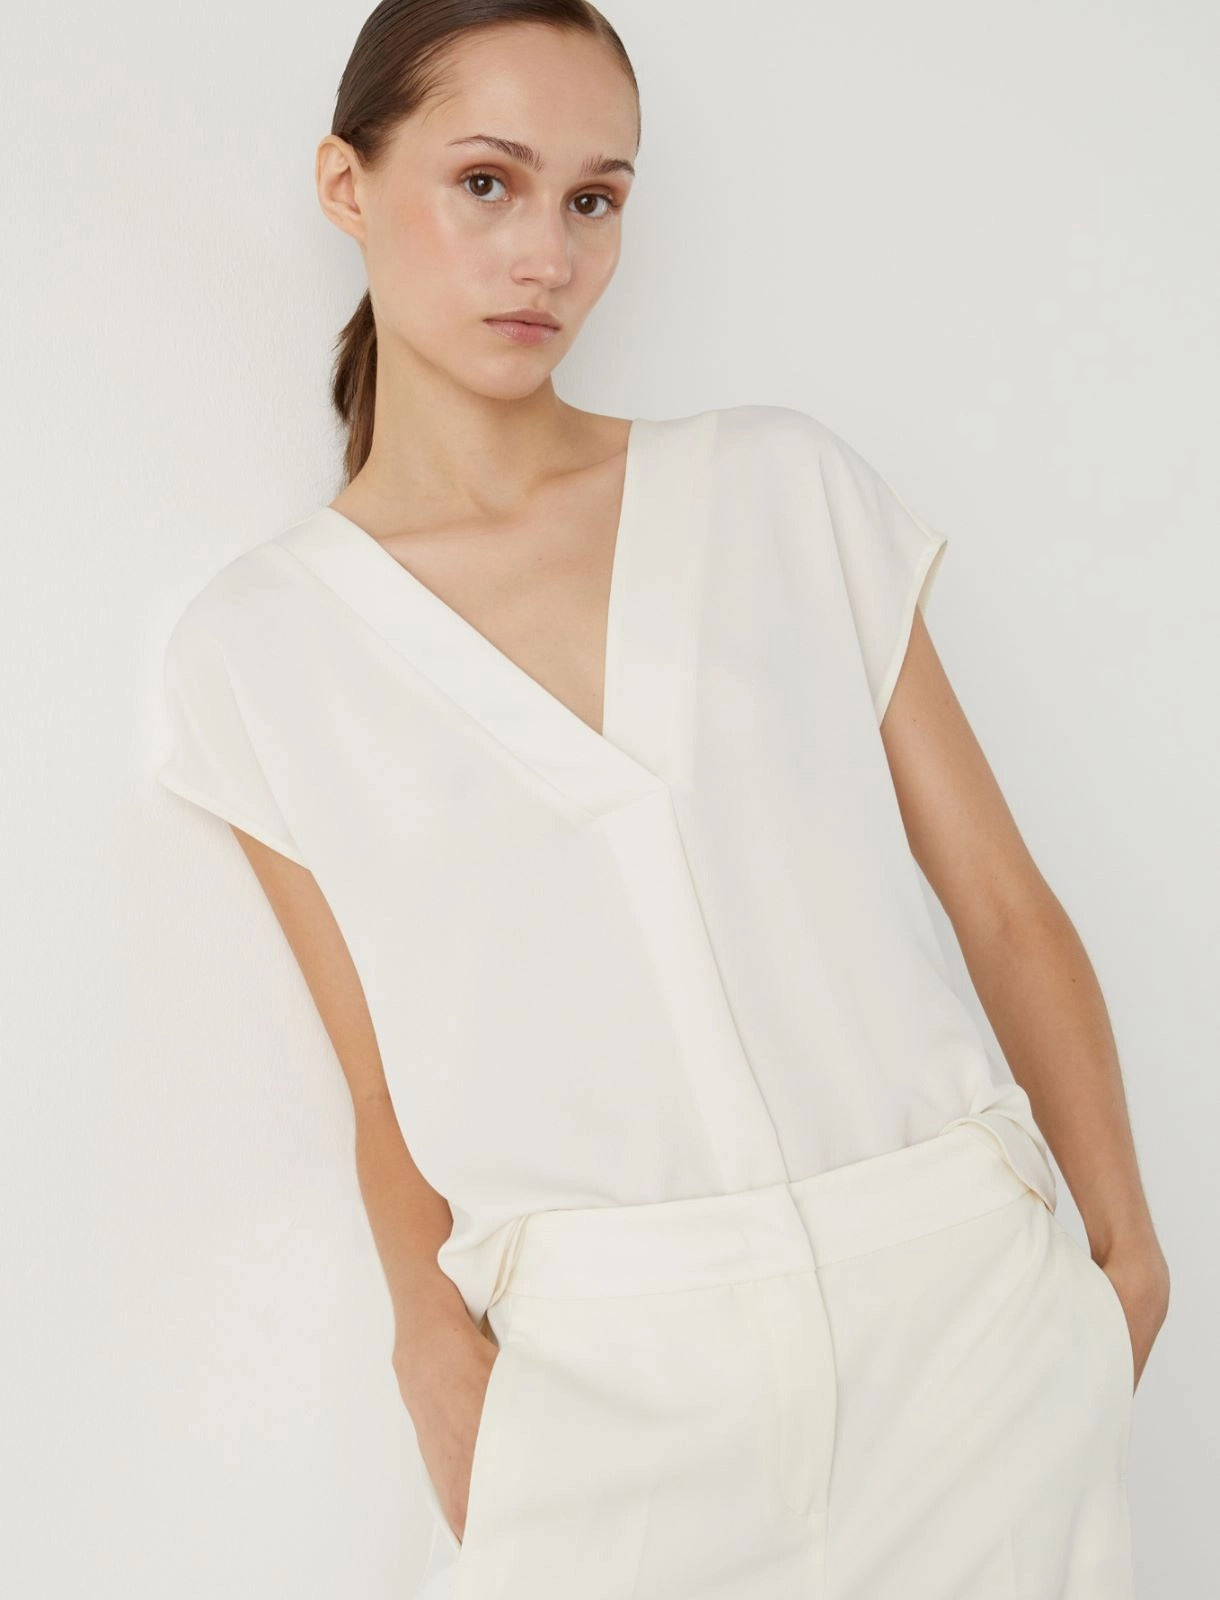 Marella Brina V-Neck Shirt in Wool White